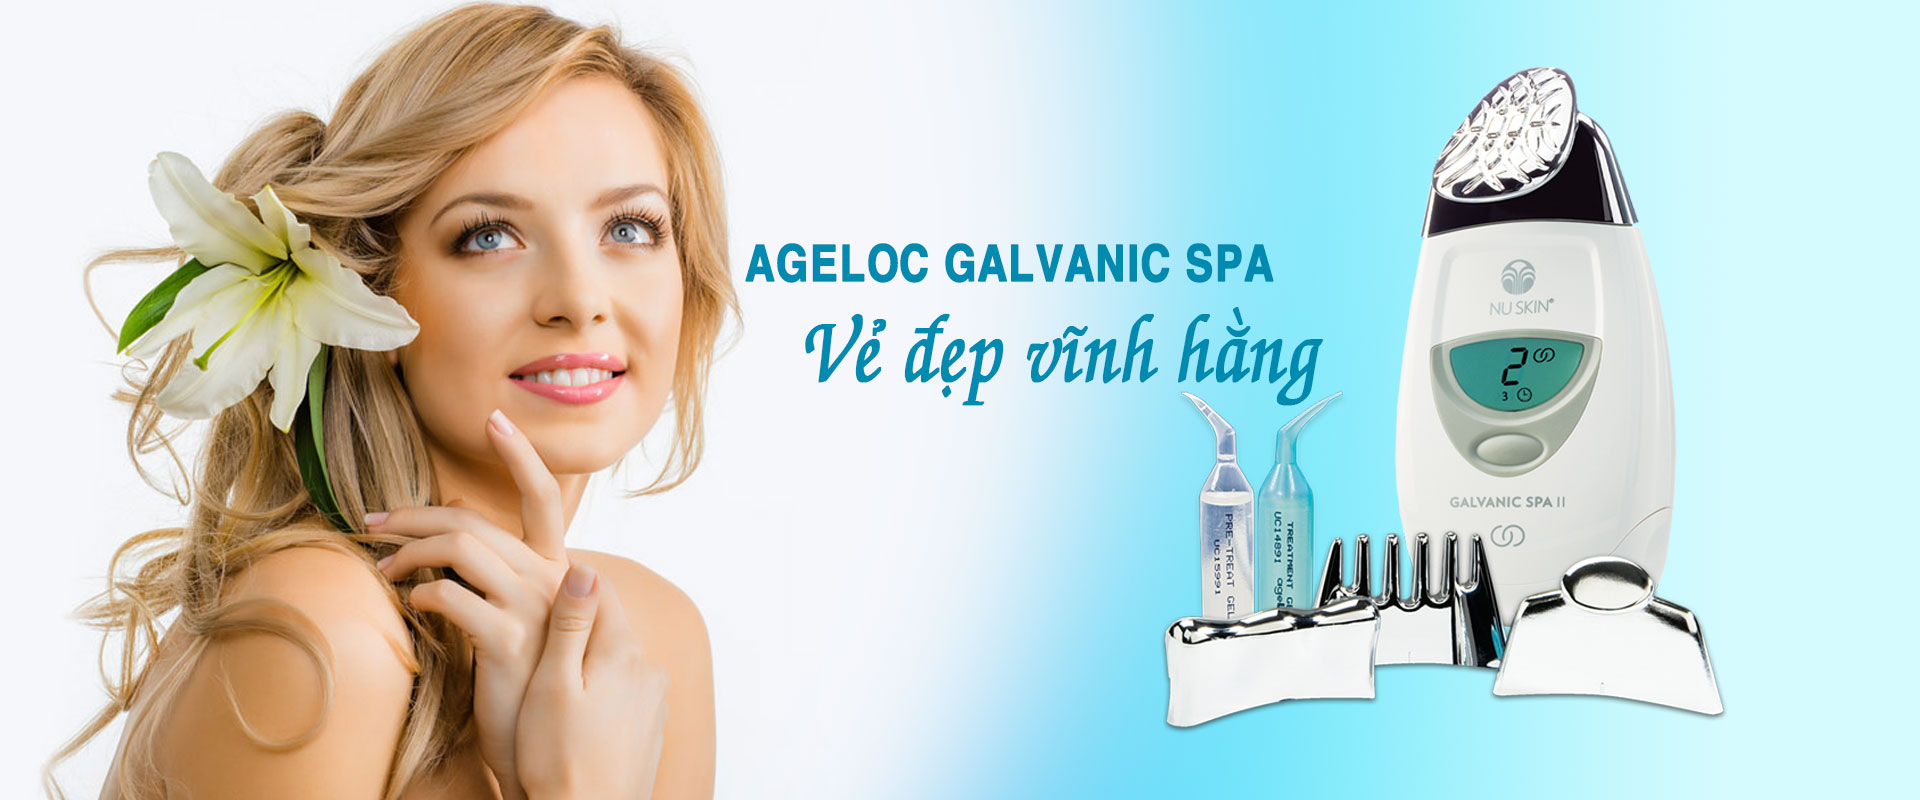 Ageloc-galvanic-face-spa-my-pham-nuskin-013